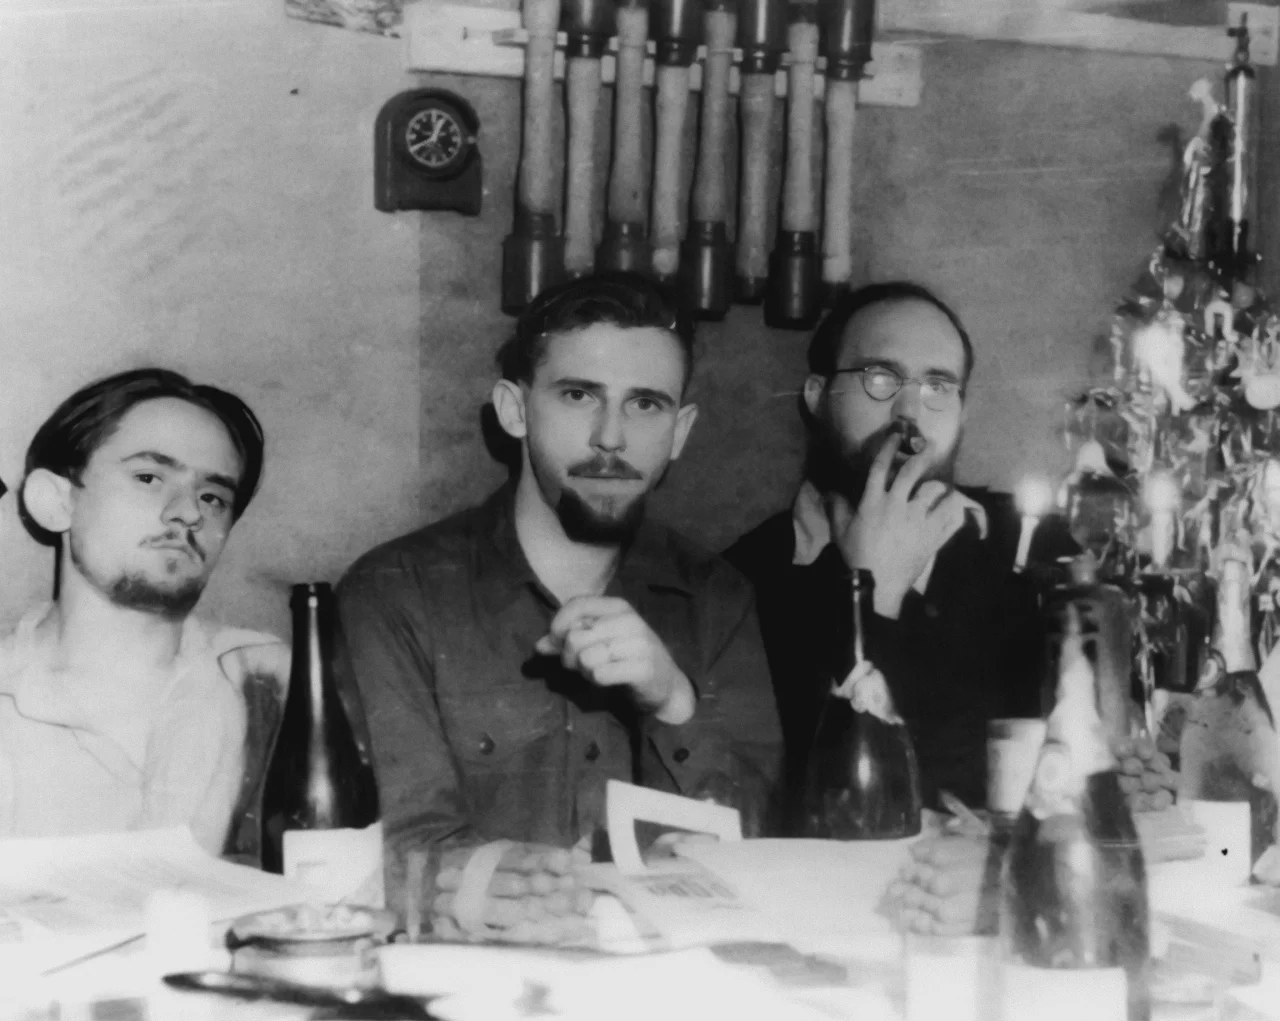 Wilhelm Dege and his men celebrate Christmas on December 24, 1944